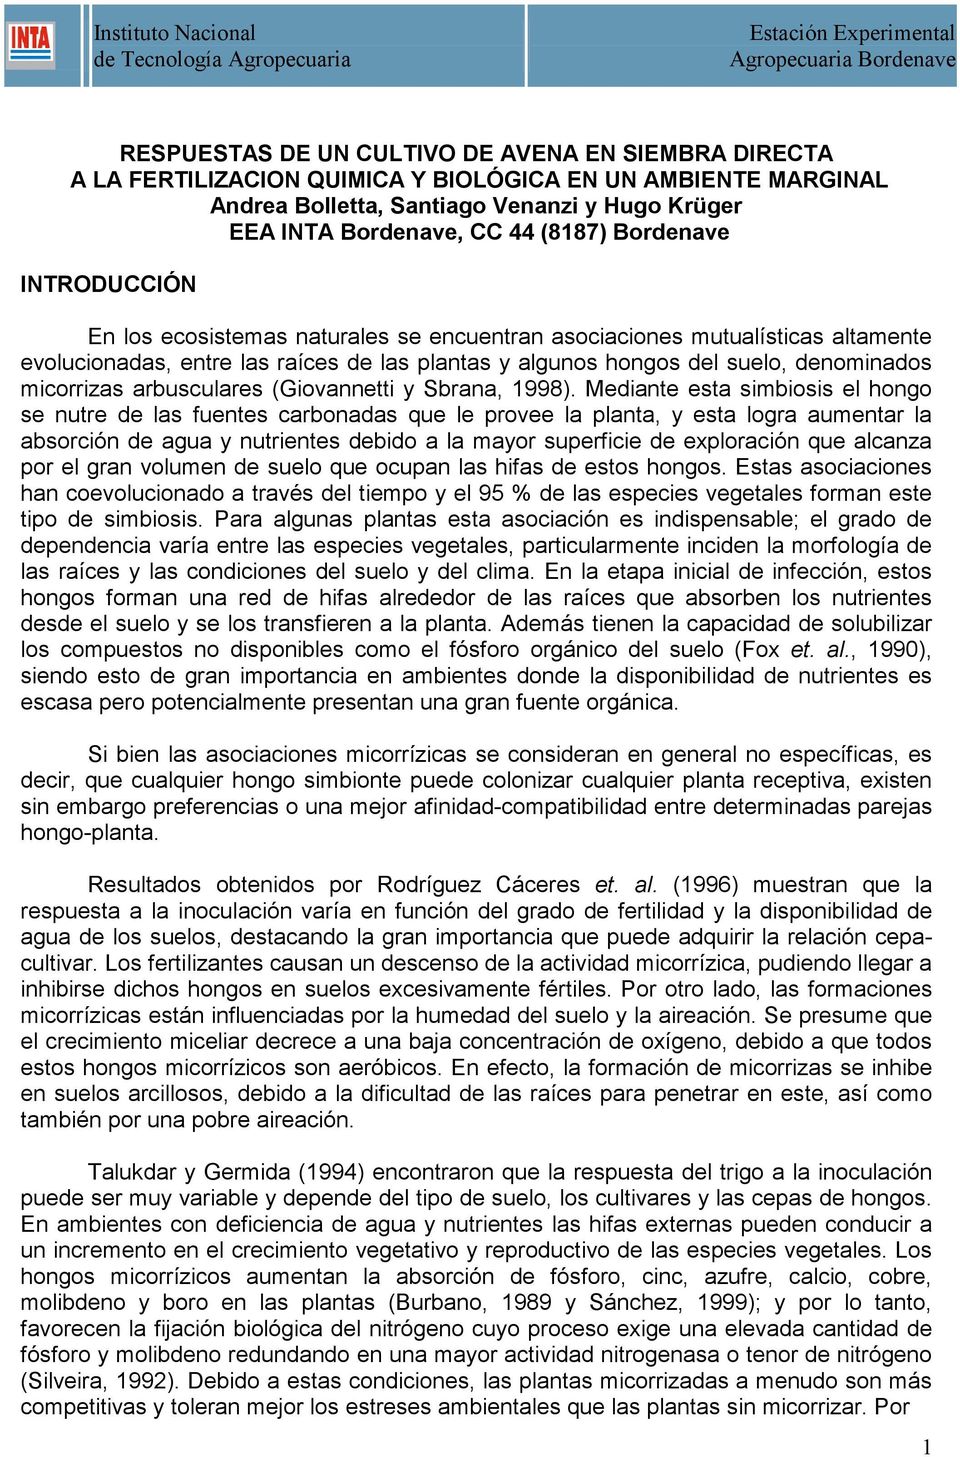 micorrizas arbusculares (Giovannetti y Sbrana, 1998).